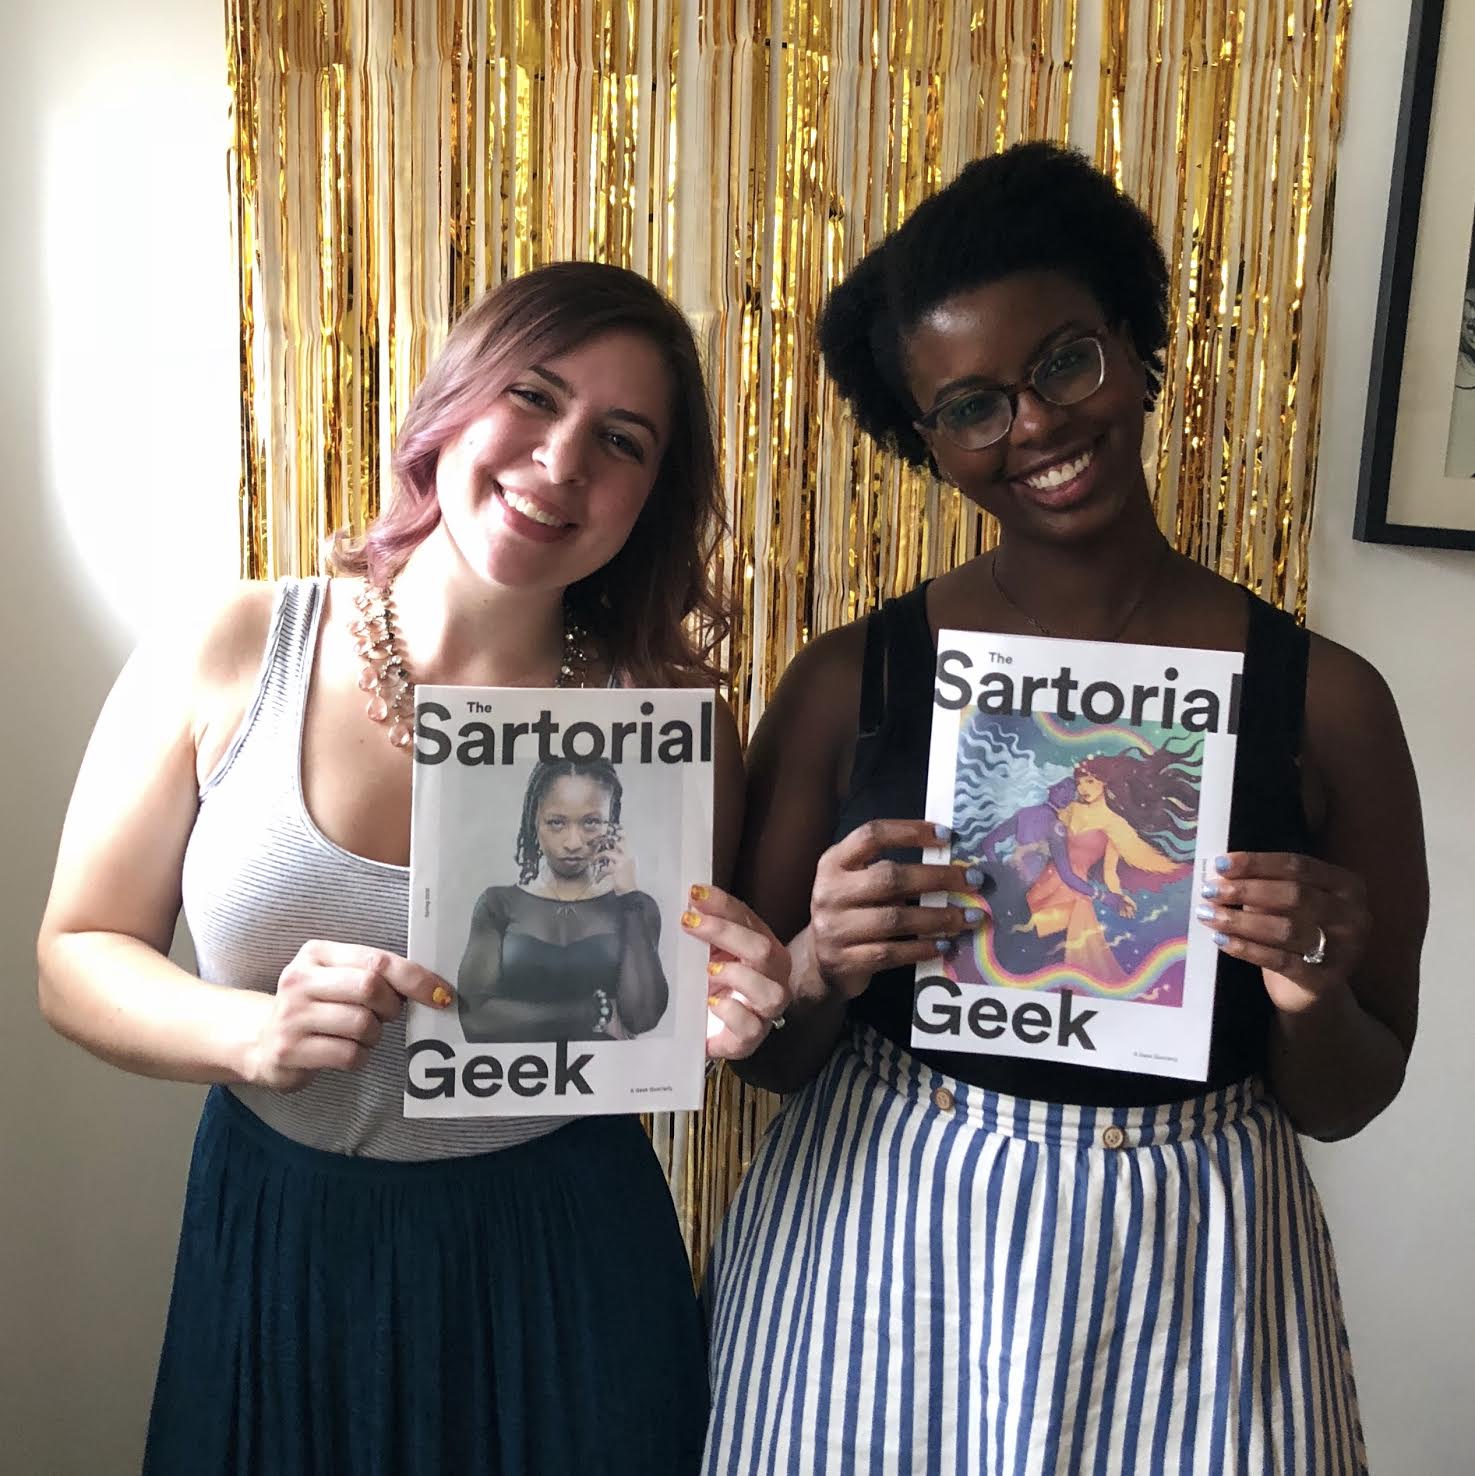 Jordan Ellis, the founder of Jordandené and The Sartorial Geek, poses with her magazine